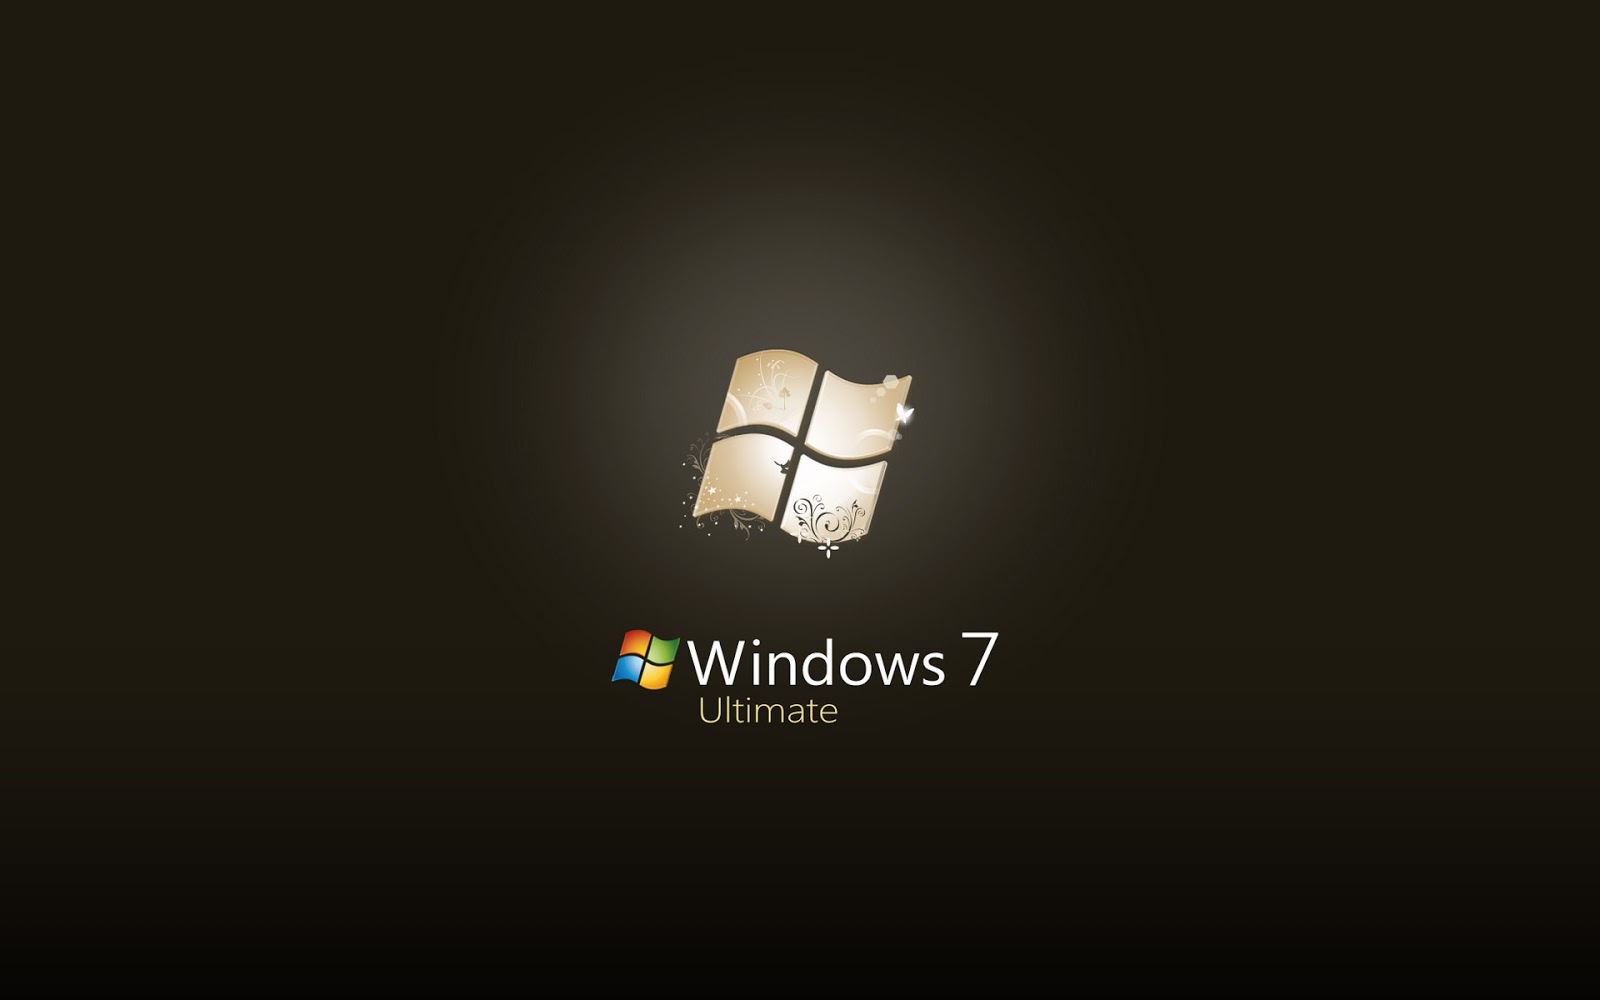 windows 7 black wallpaper,logo,operating system,text,font,sky